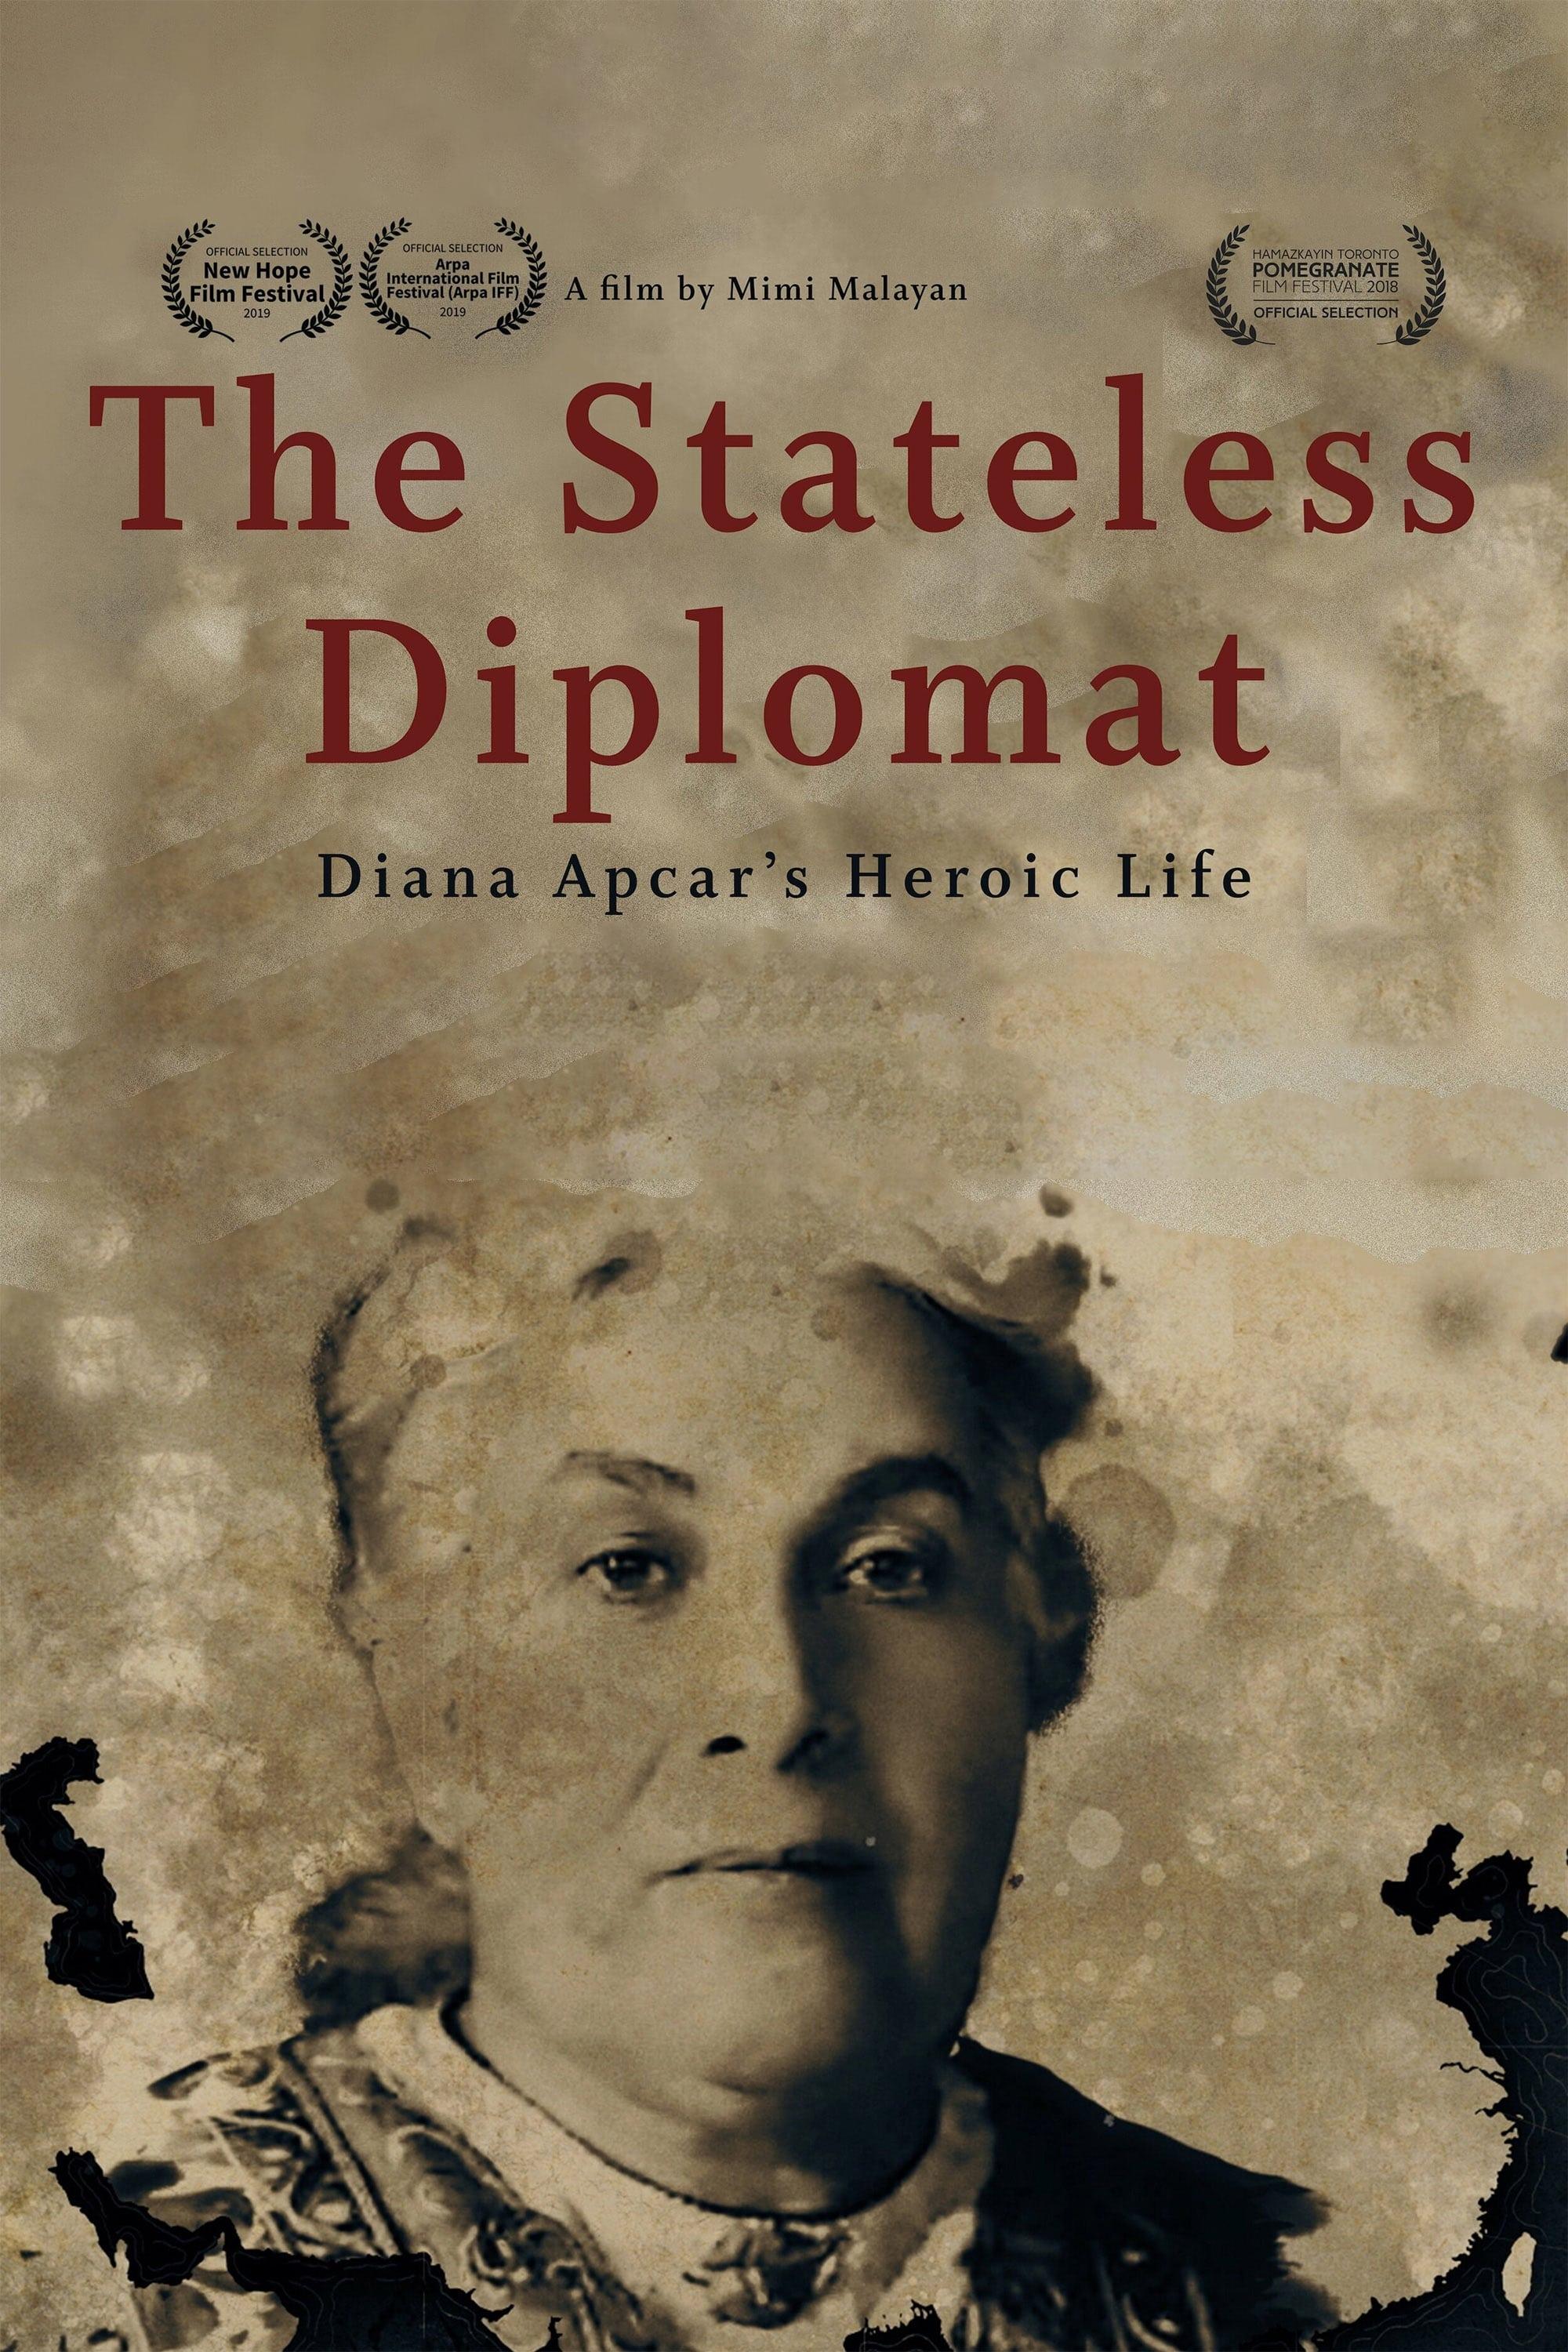 The Stateless Diplomat: Diana Apcar's Heroic Life poster